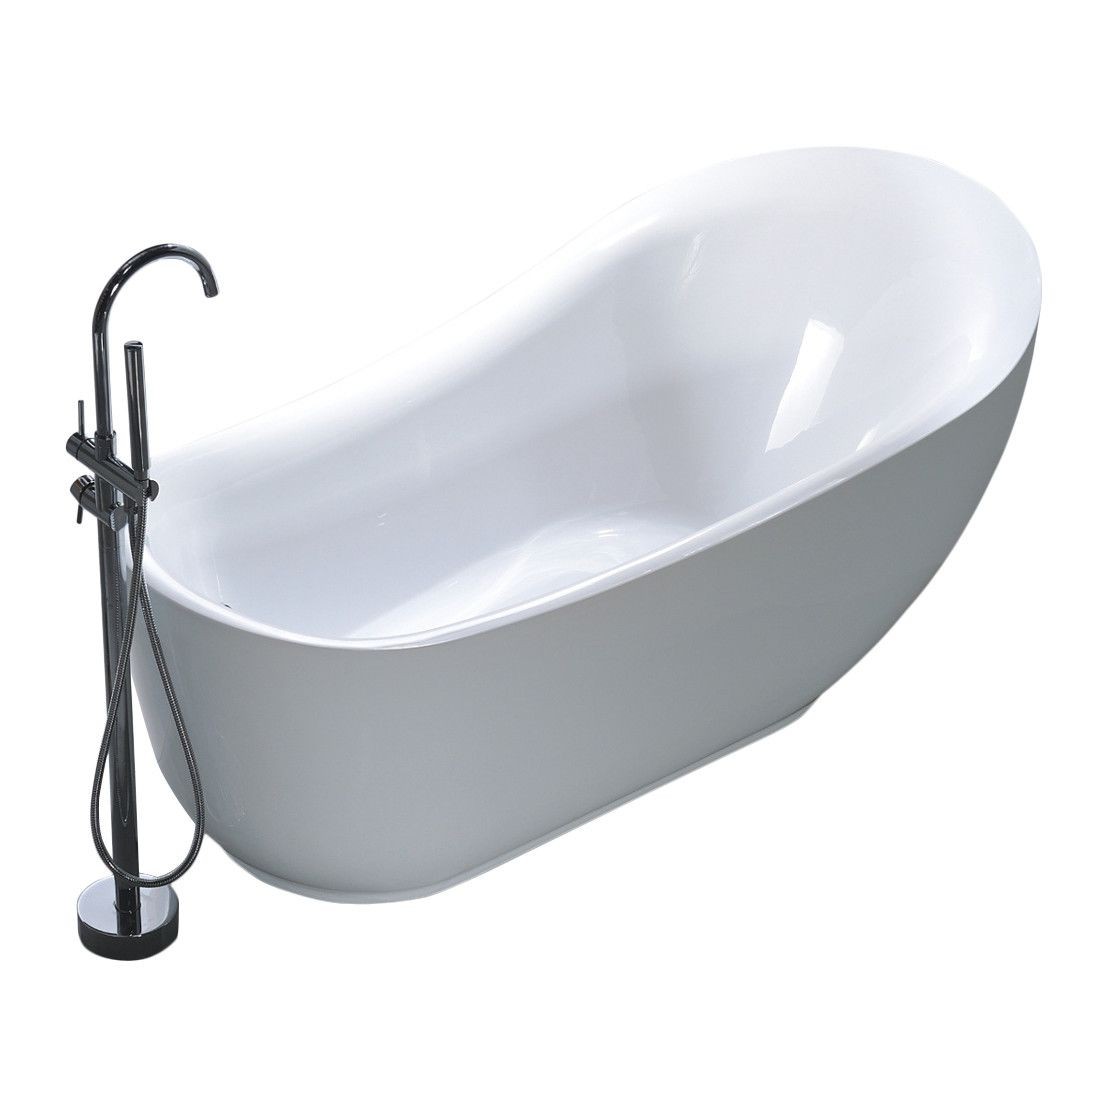 VANITY ART VA6512-L 70 7/8 INCH FREESTANDING ACRYLIC SOAKING BATHTUB WITH ROUND OVERFLOW AND POP-UP DRAIN - WHITE